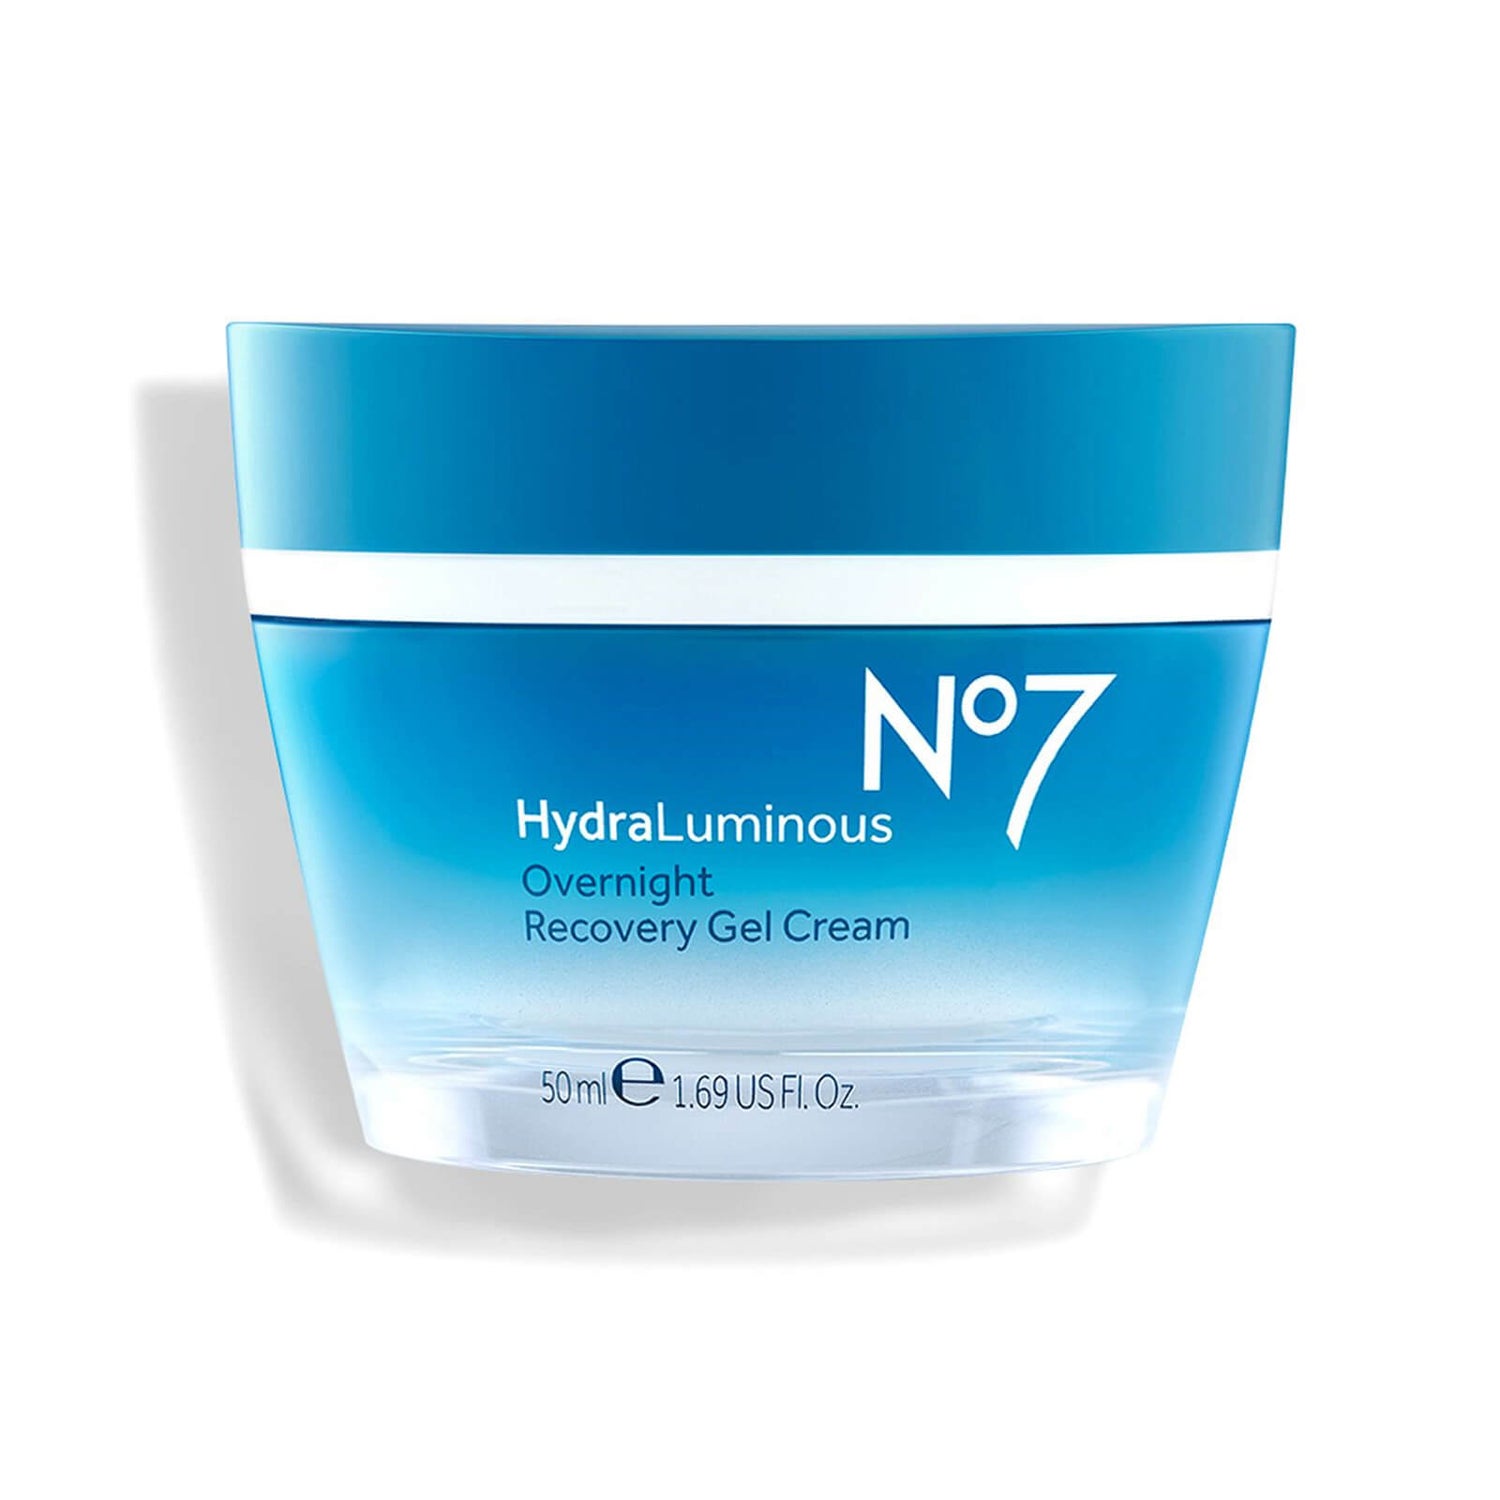 HydraLuminous Overnight Recovery Gel Cream 50ml